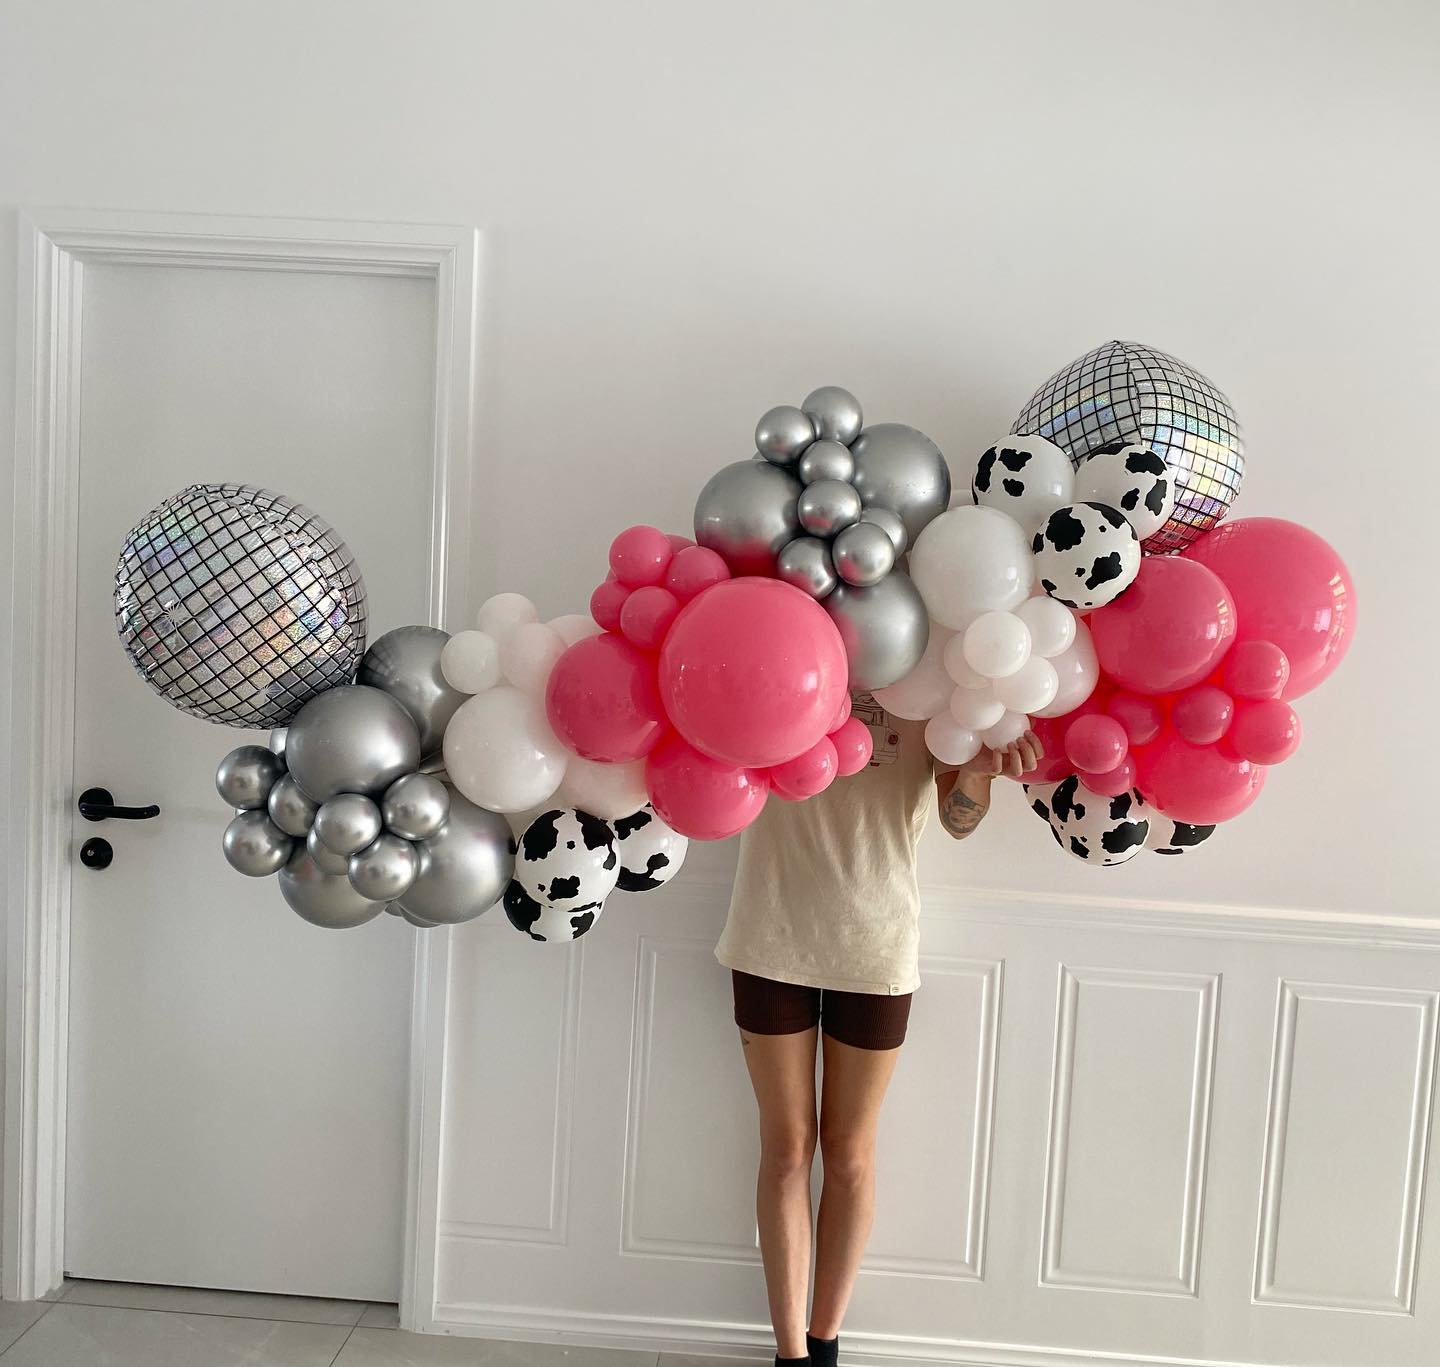 Balloon garland by metre